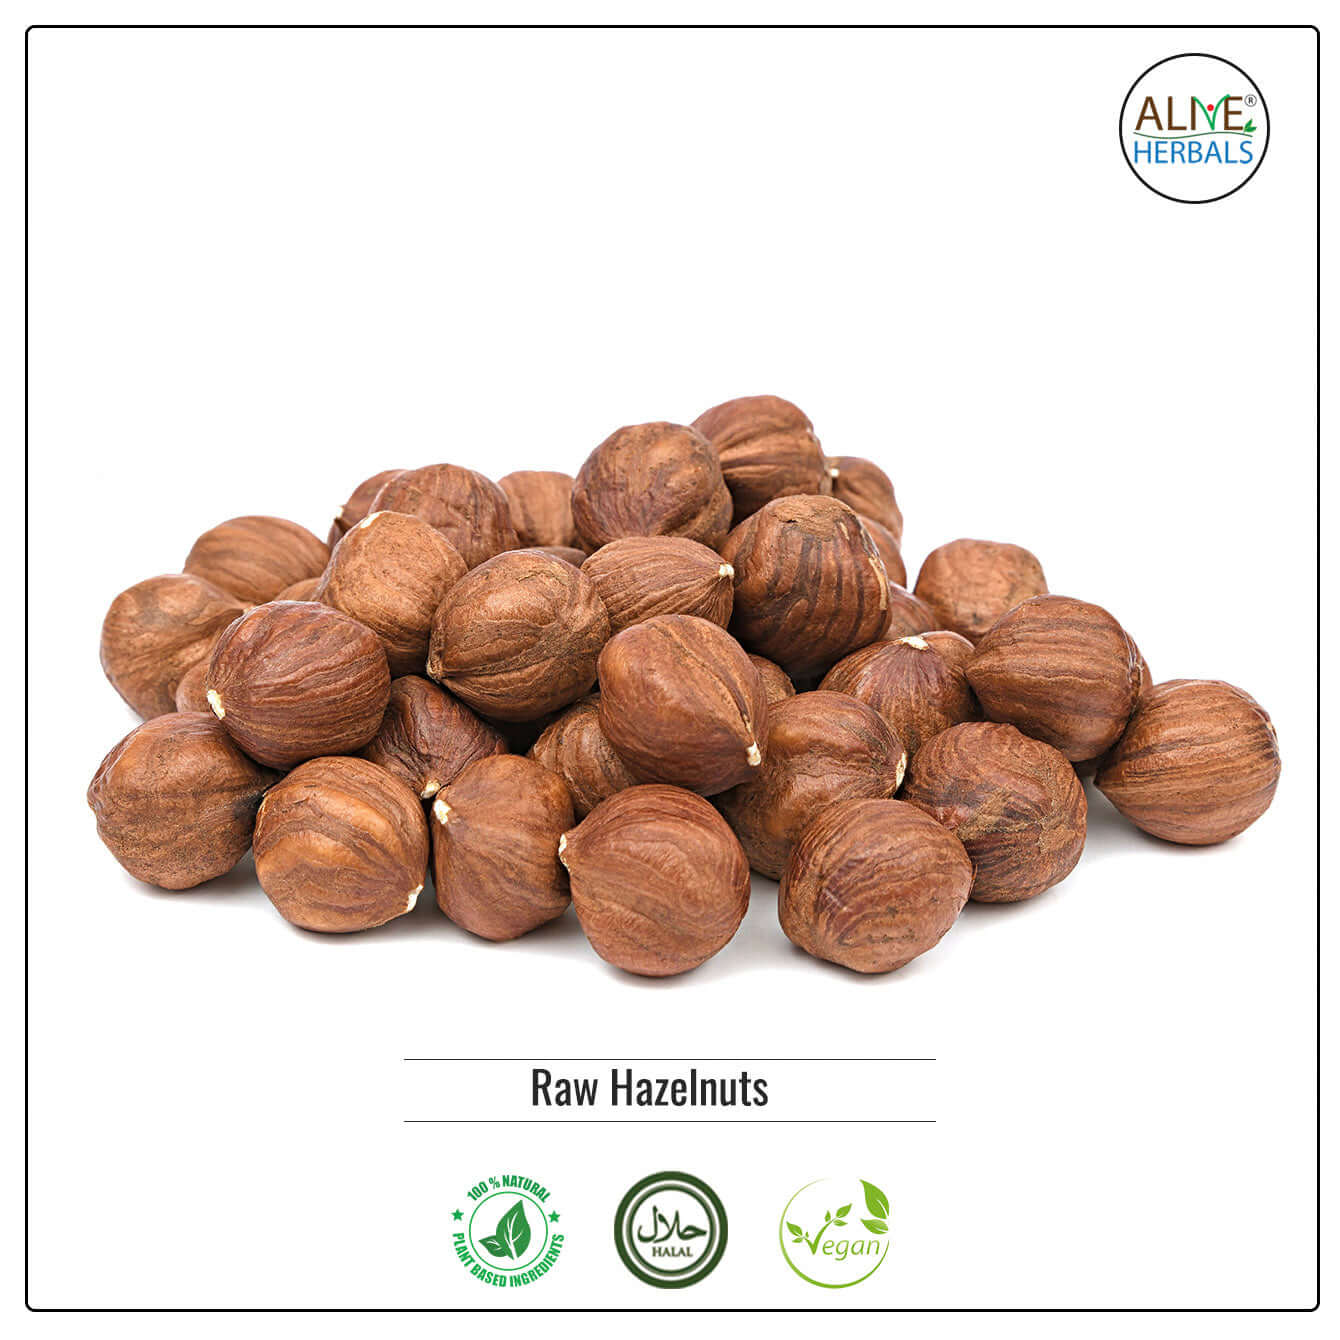 Raw Hazelnuts - Buy at Natural Food Store | Alive Herbals.